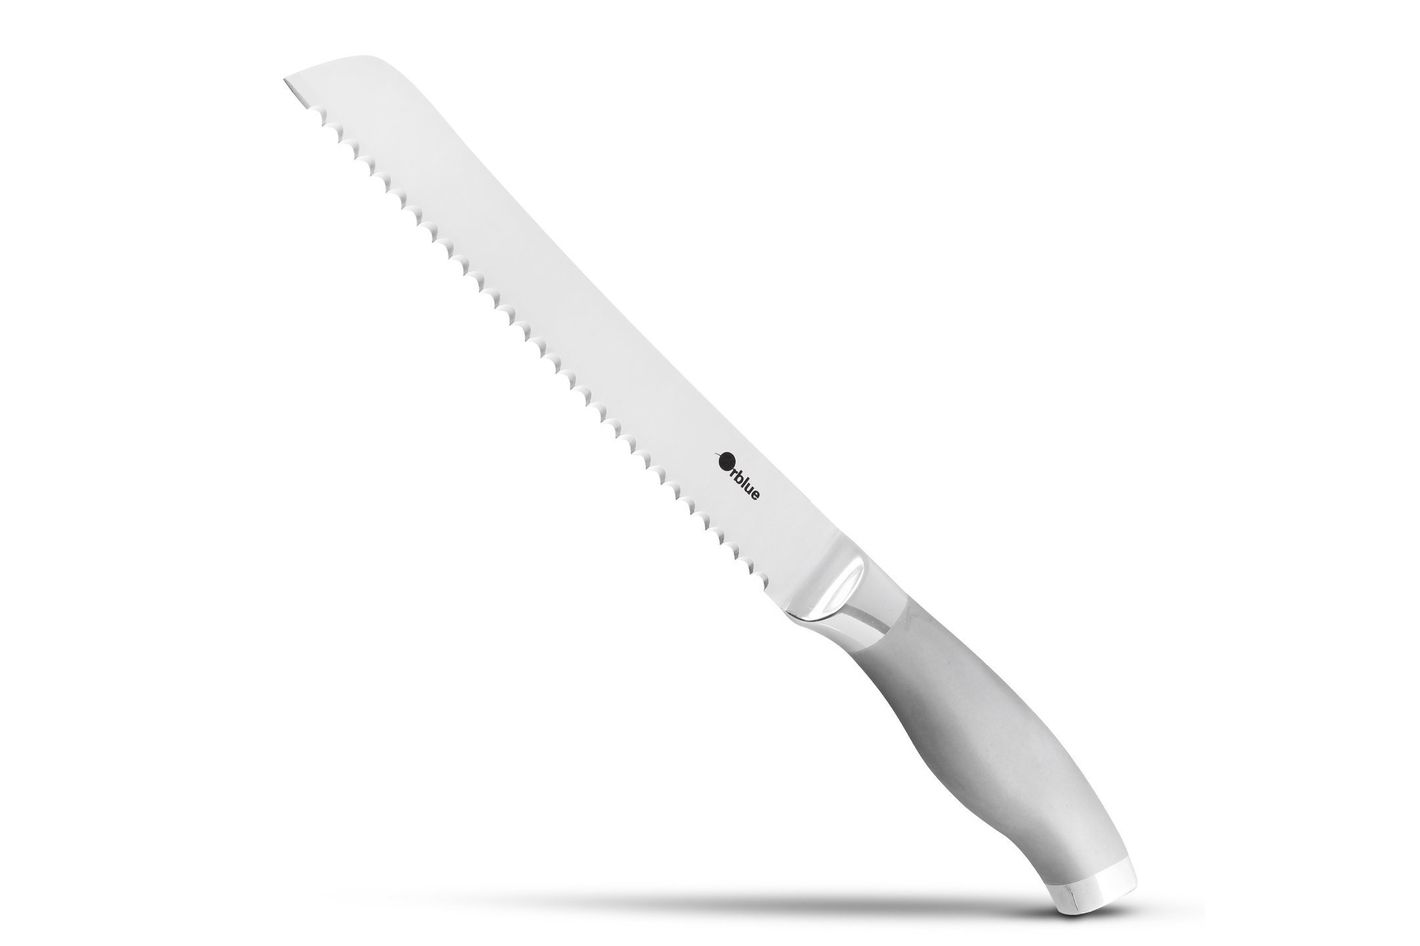 serrated bread knife